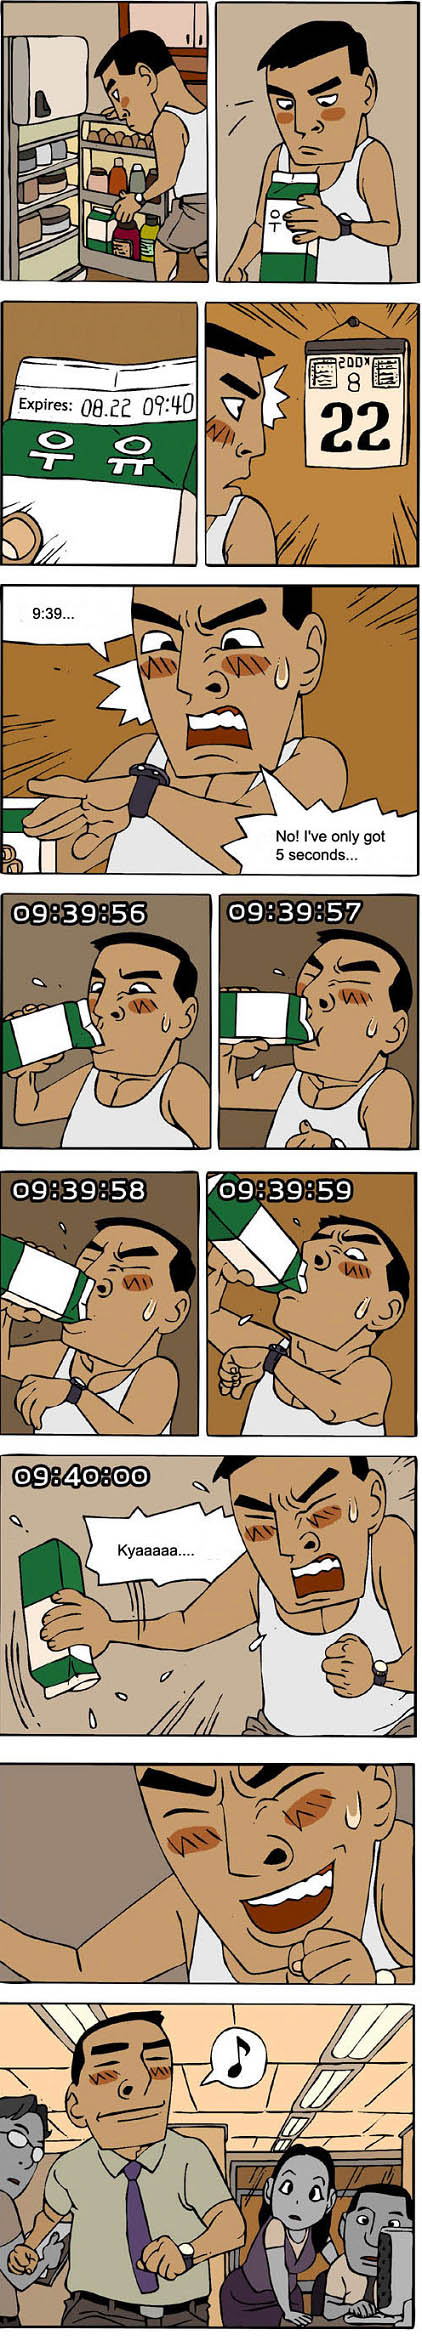 Funny Comic: Chugging Milk Before it Expires